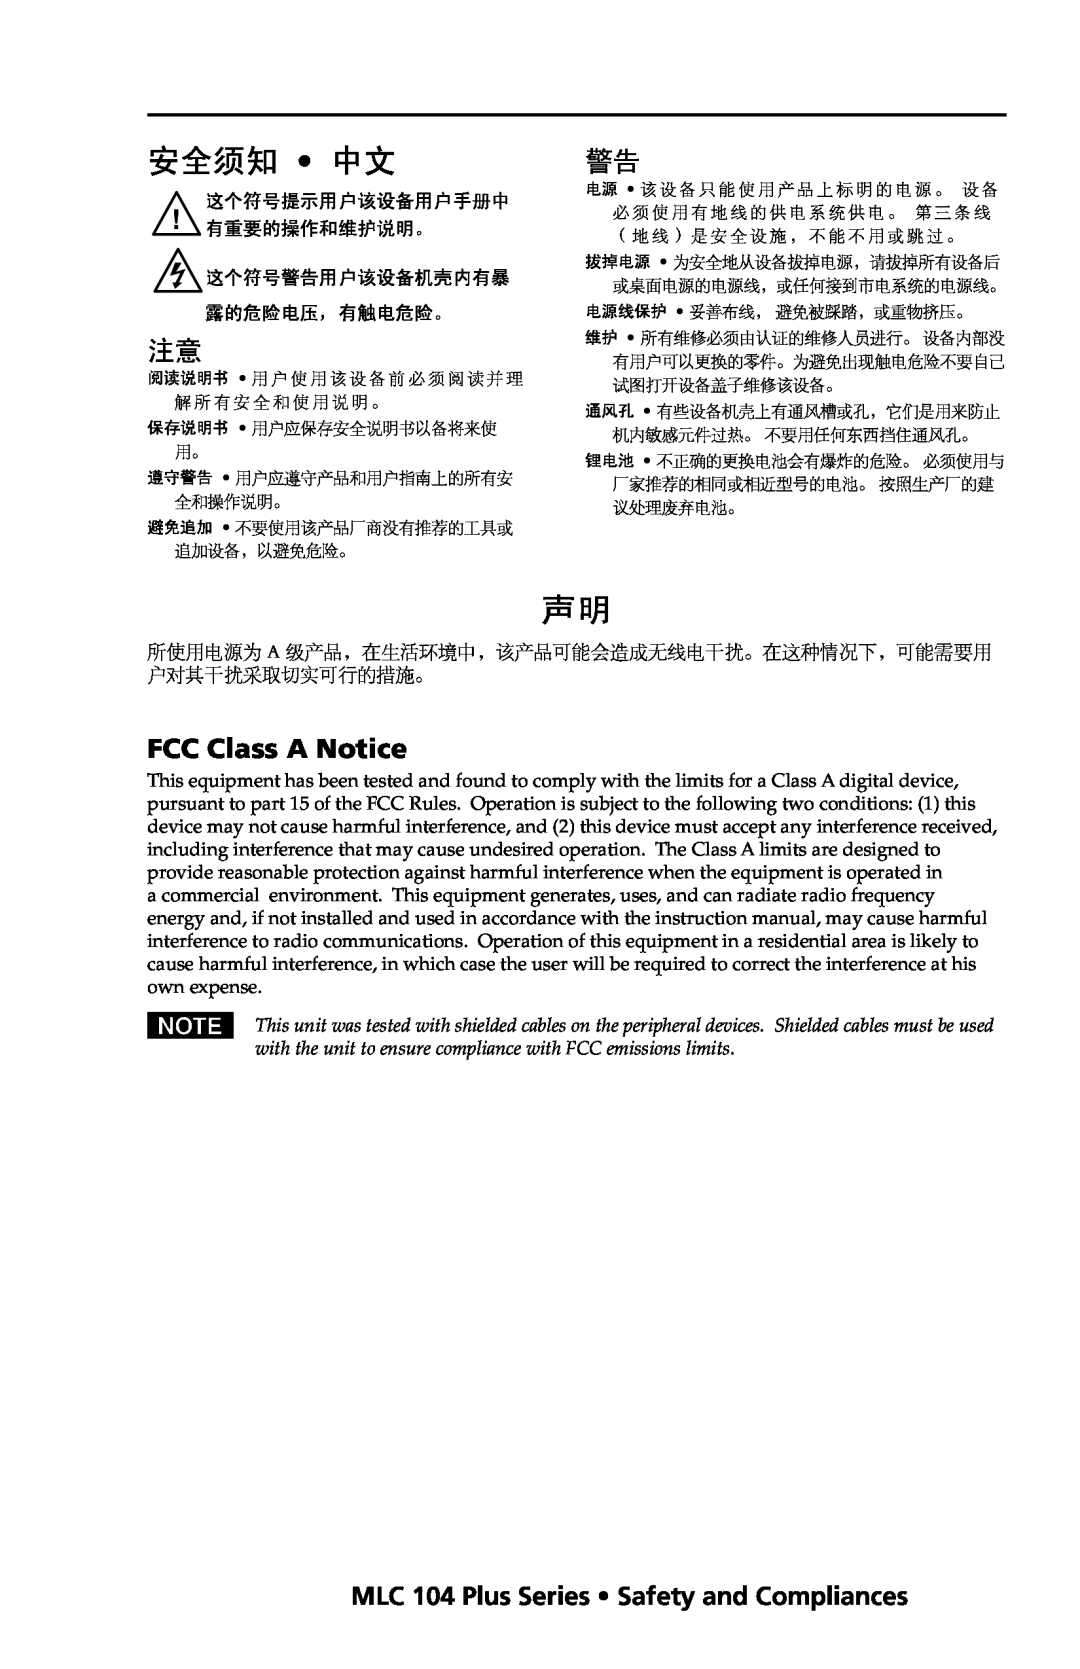 Extron electronic FCC Class A Notice, MLC 104 Plus Series Safety and Compliances, 安全须知 中文, 拔掉电源 为安全地从设备拔掉电源，请拔掉所有设备后 